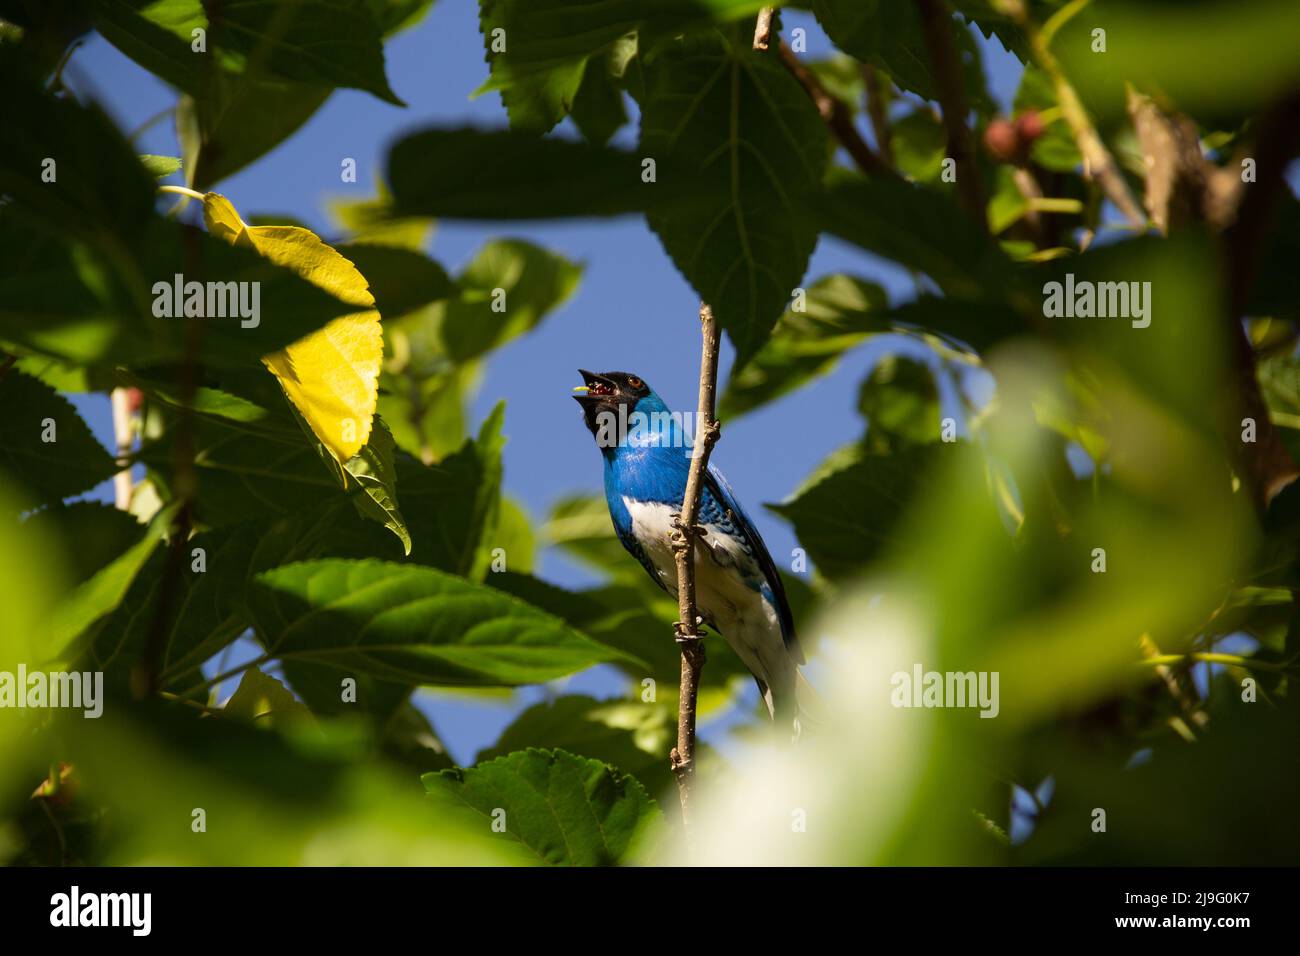 Goiania, Goiás, Brazil – May 22, 2022: A blue colored bird, perched on a branch of a tree, eating a blackberry. Saí-andorinha macho (Tersina viridis). Stock Photo